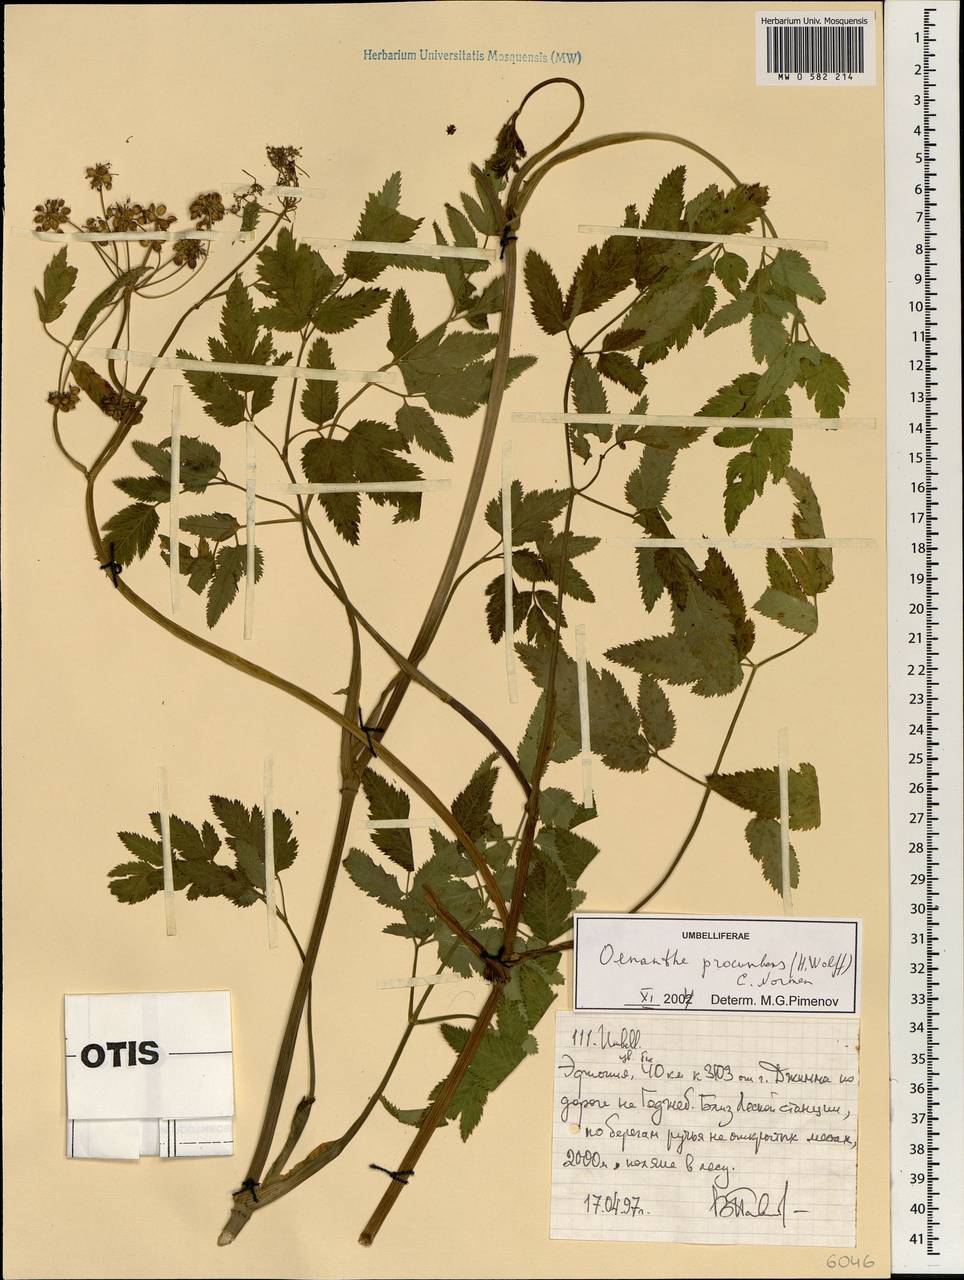 Oenanthe procumbens (H. Wolff) C. Norman, Африка (AFR) (Эфиопия)